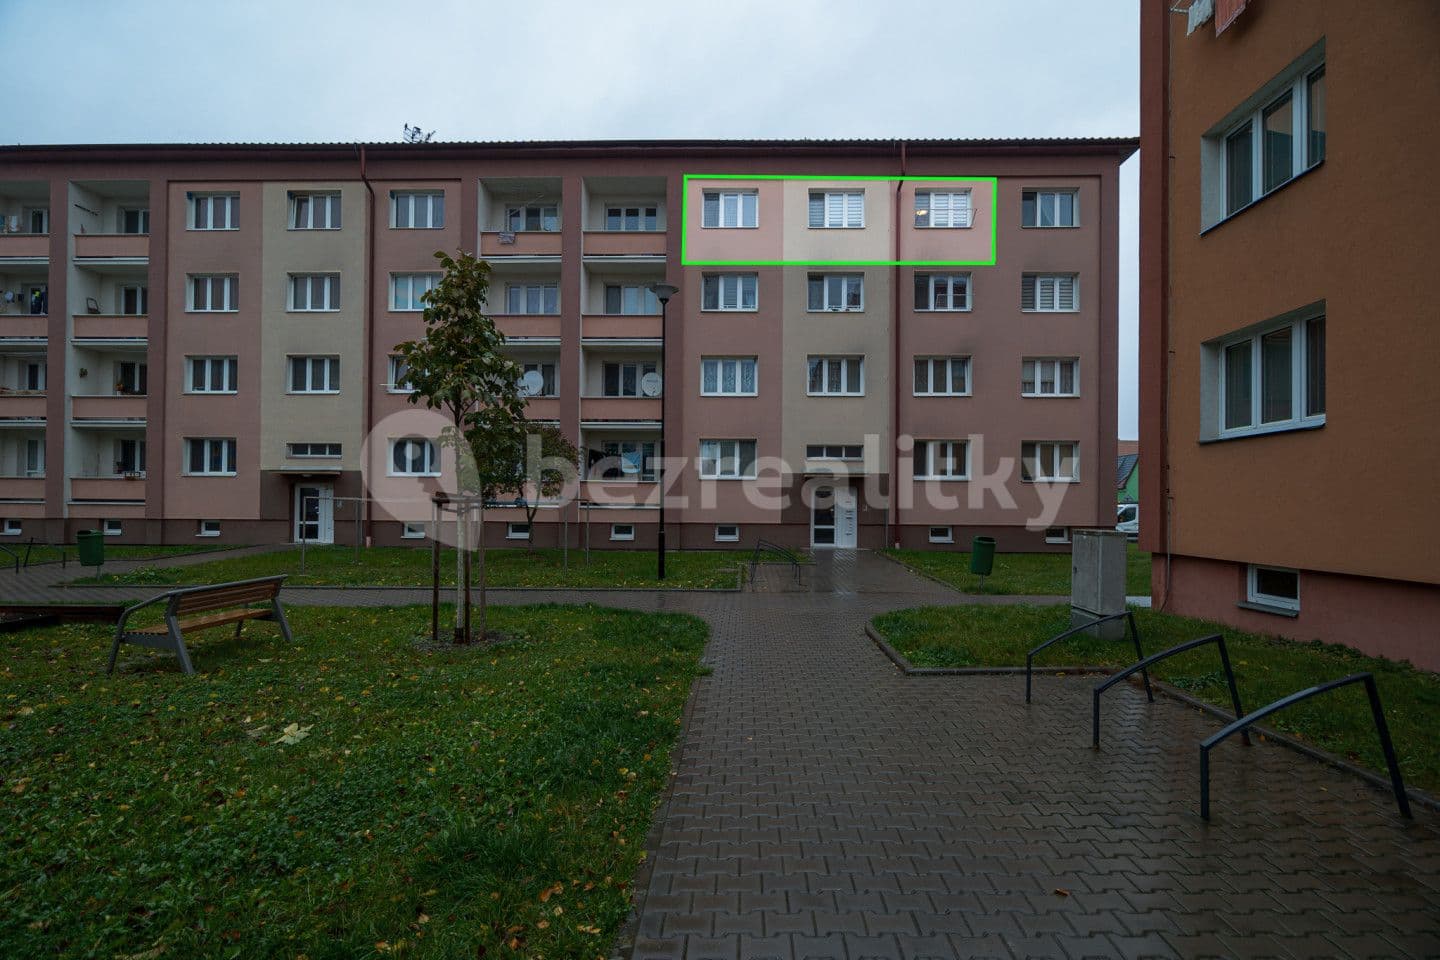 2 bedroom flat for sale, 52 m², Novosady, Litovel, Olomoucký Region